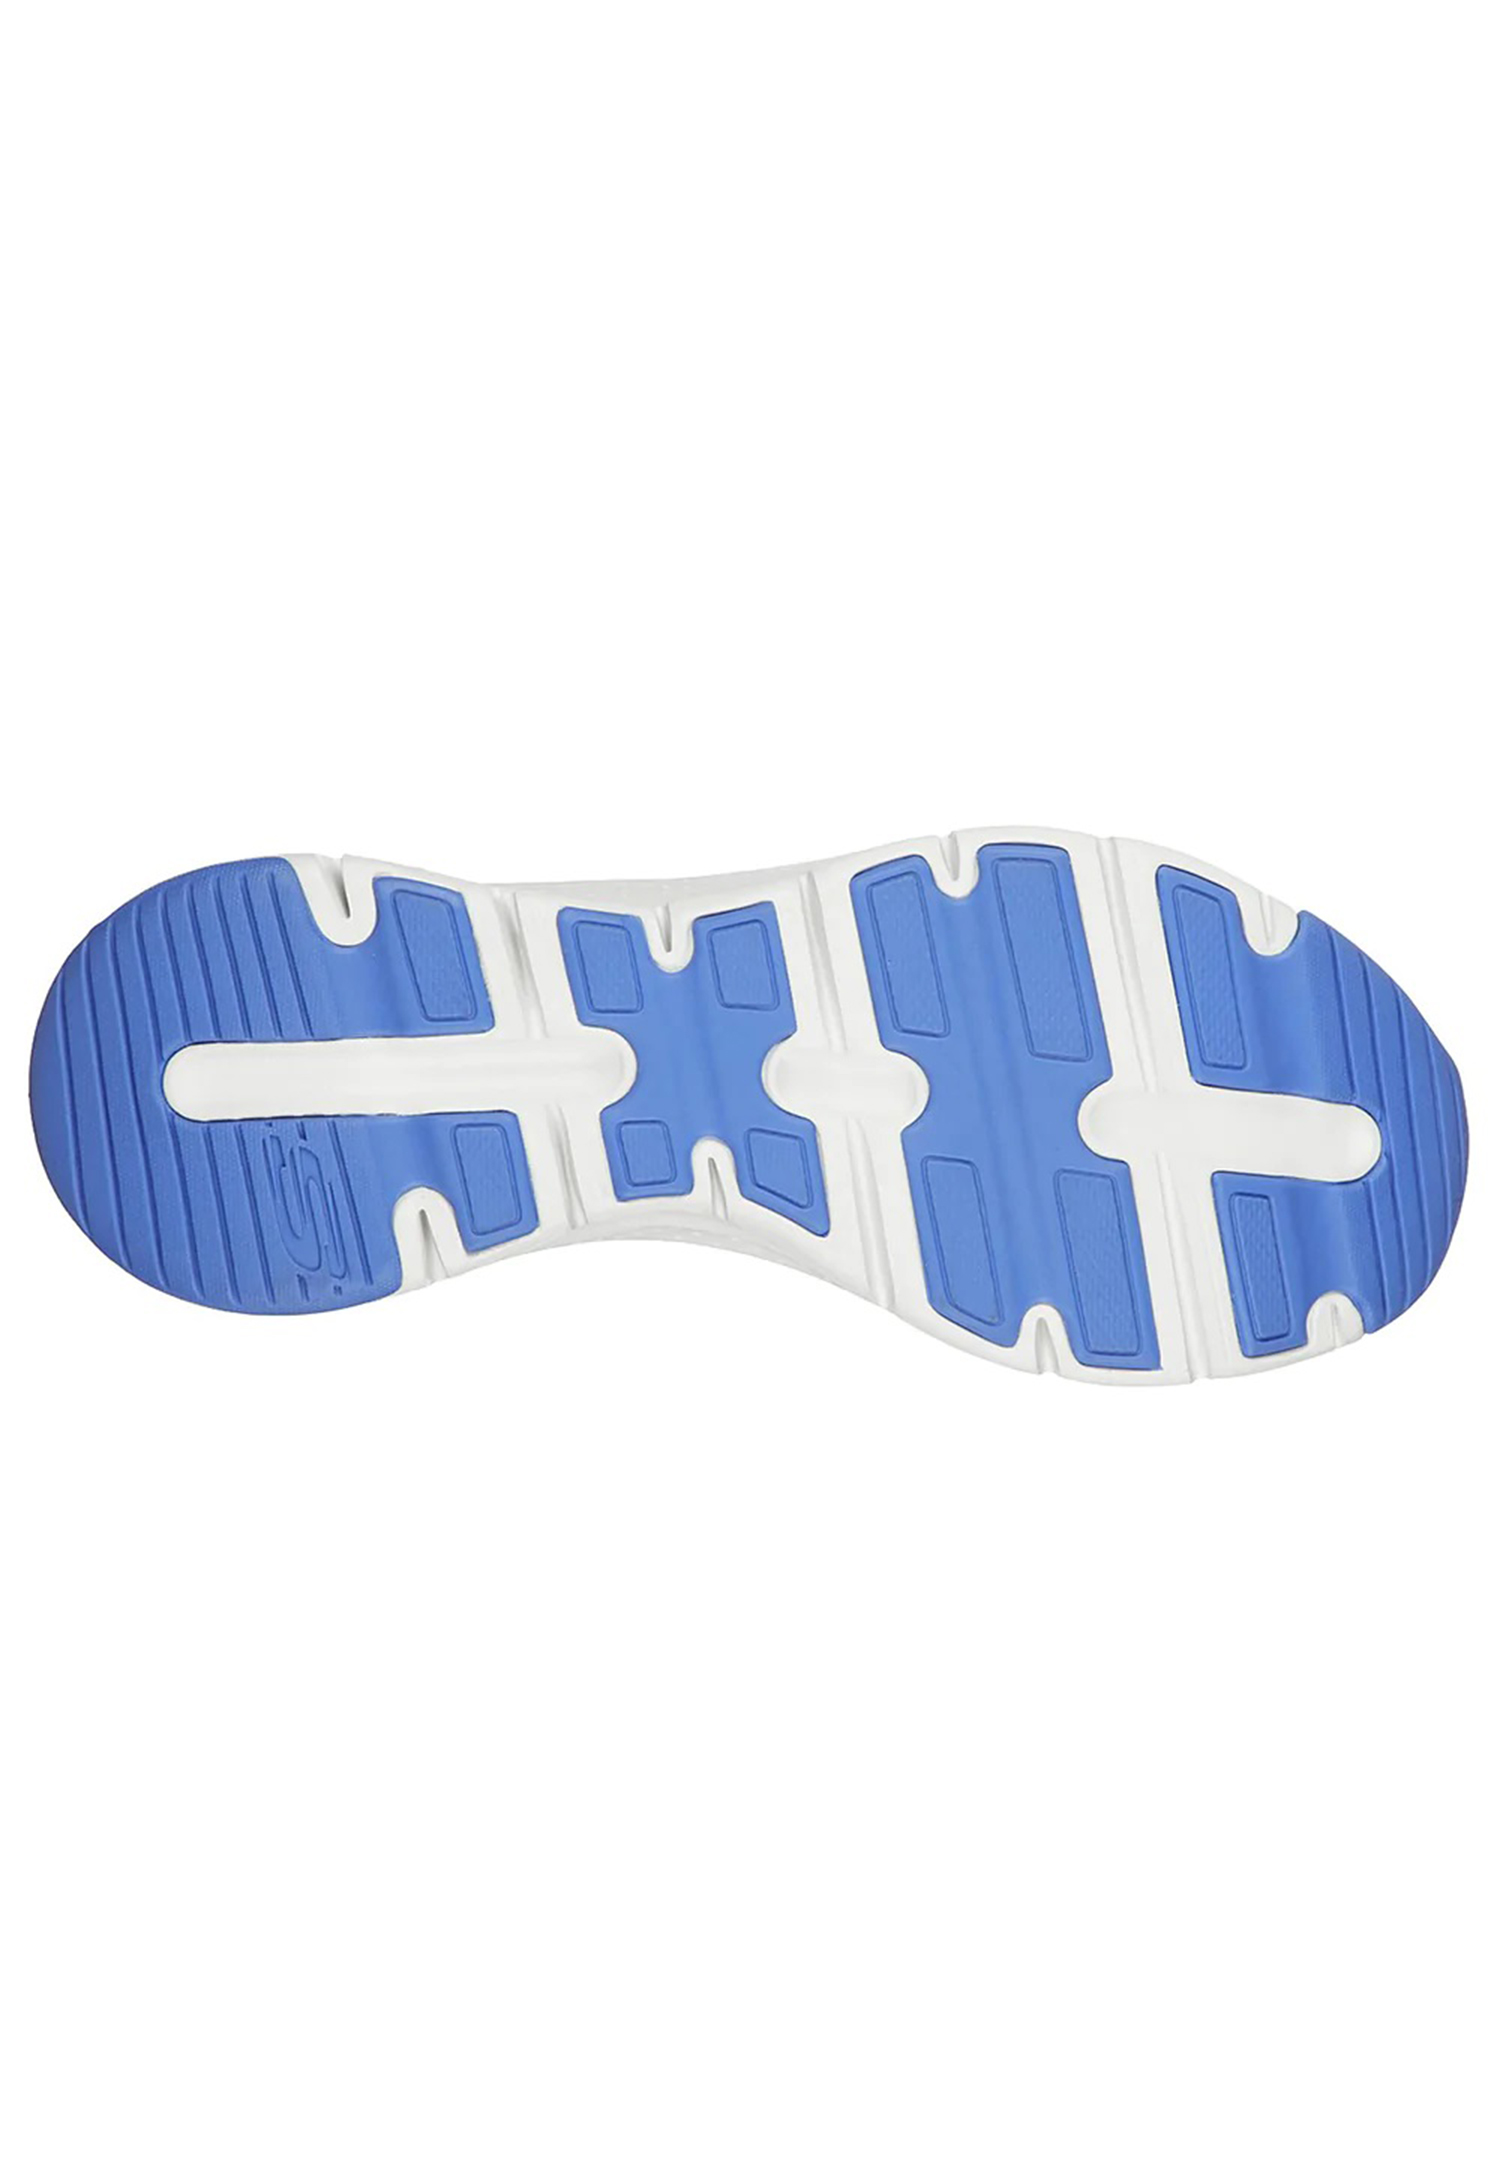 Skechers Arch Fit - COMFY WAVE Damen Sneaker 149414 NVBL blau